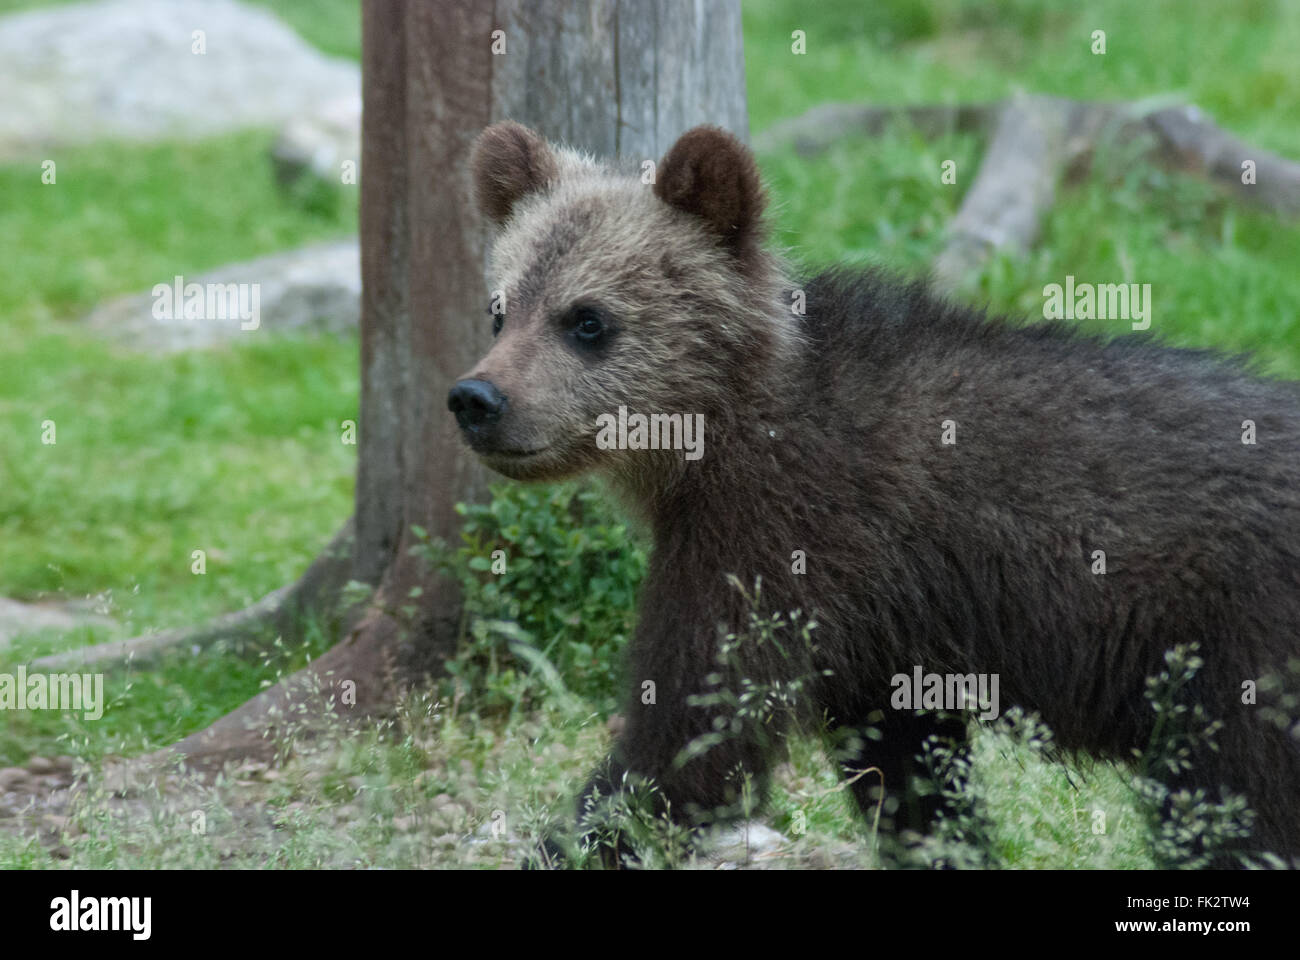 Unione di orso bruno eurasiatico o orso bruno ( Ursus arctos arctos) cub nella Taiga foresta in Finlandia orientale Foto Stock